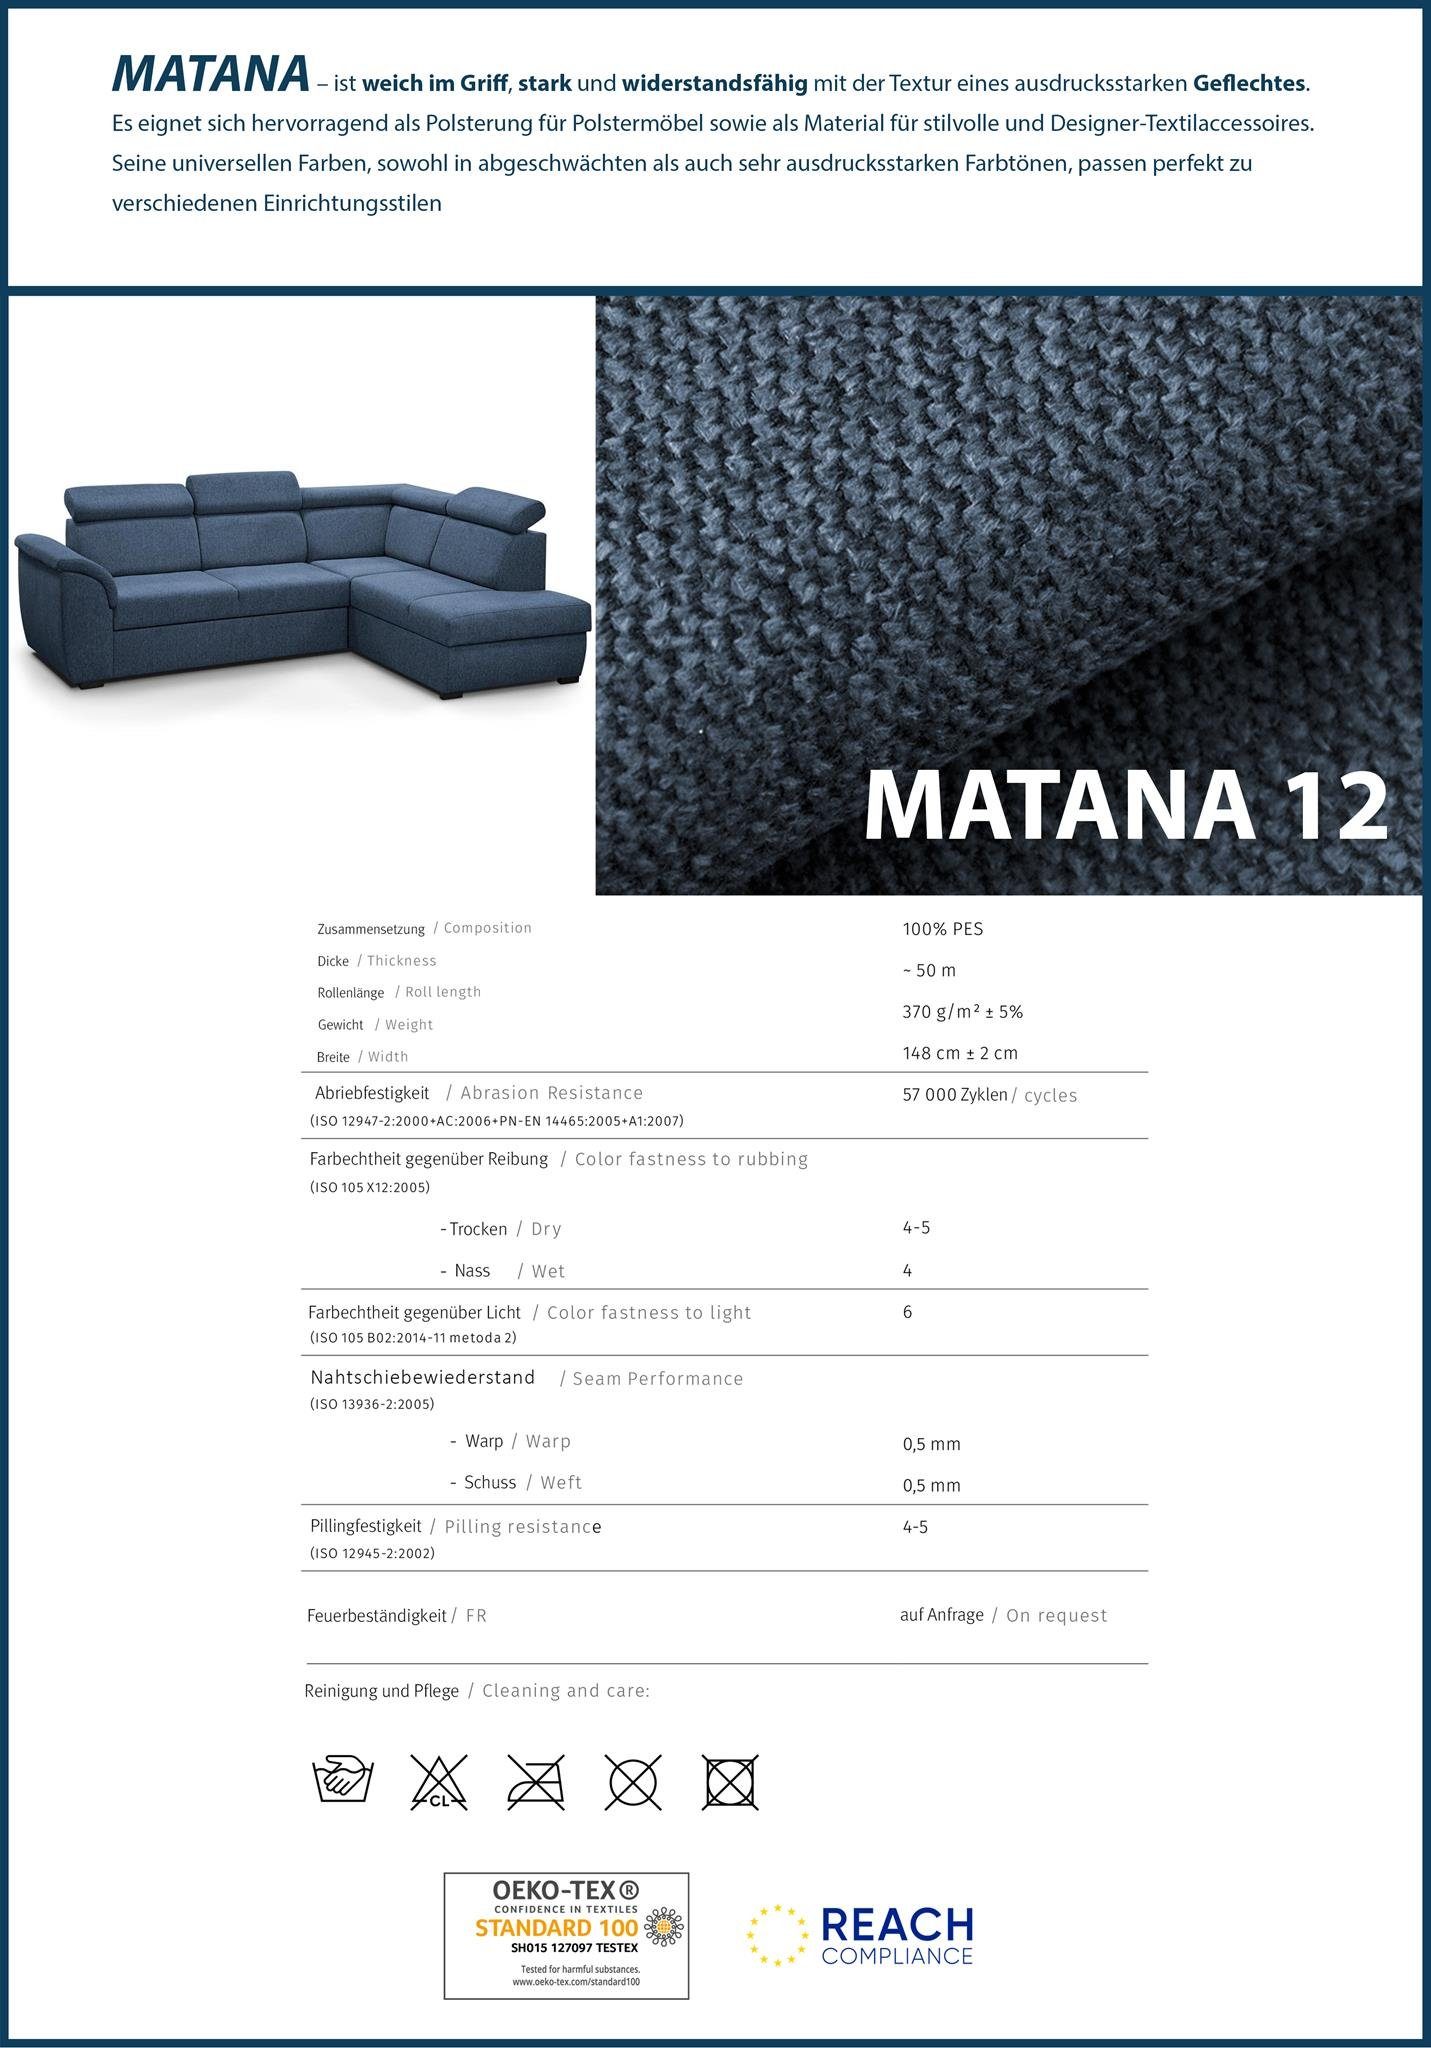 Madera mit Lounge stilvoll Relaxsessel verstellbare Wellenfedern), (matana Beautysofa Polstersessel Blau 12) mit Sessel Kopfstütze (modern